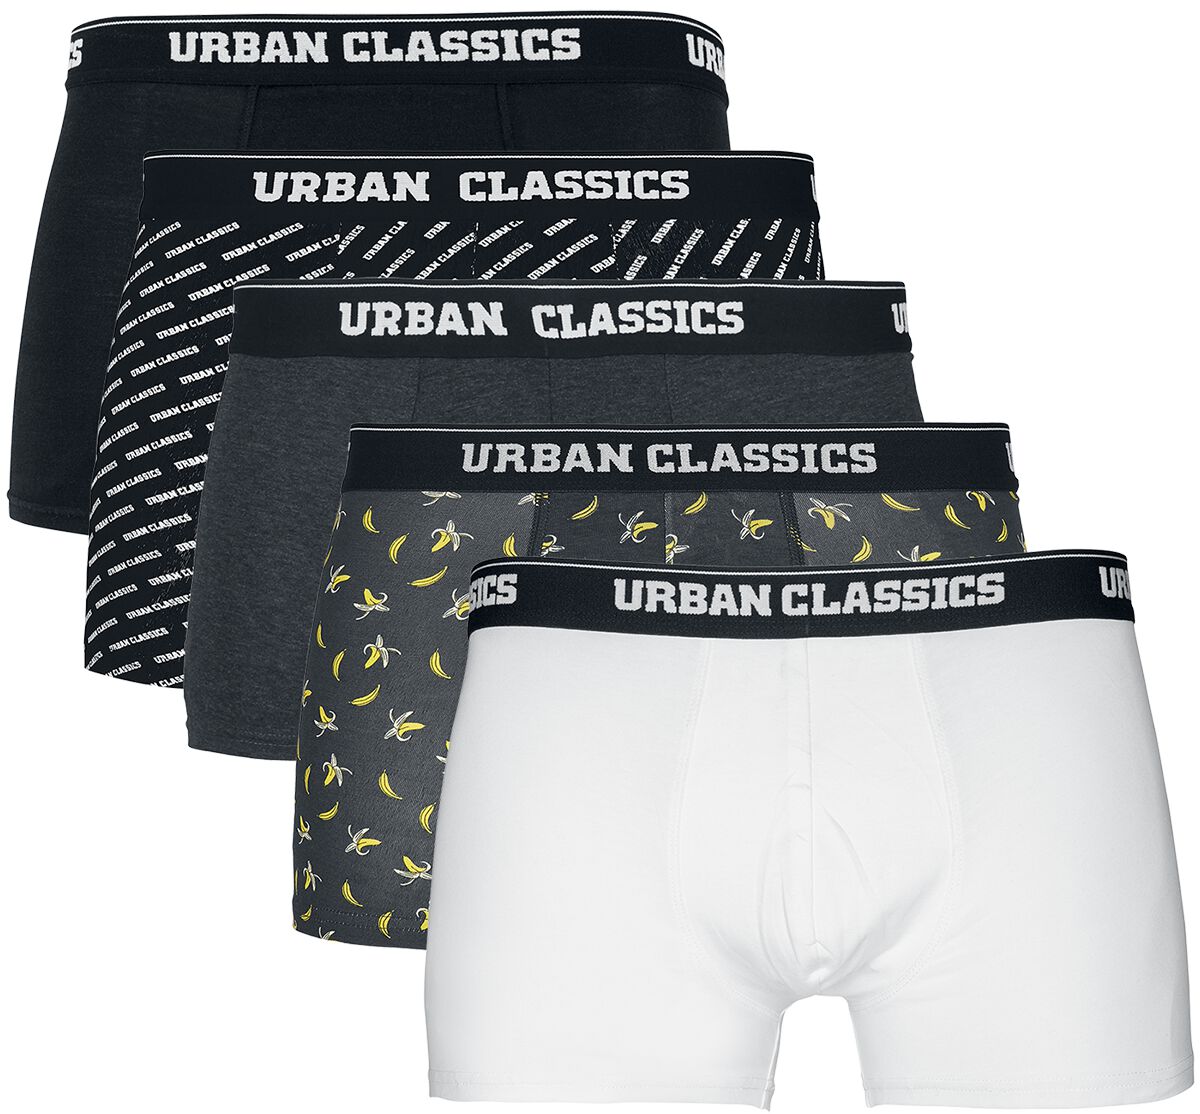 Urban Classics Boxer Shorts 5-Pack Boxershort-Set schwarz grau weiß in S